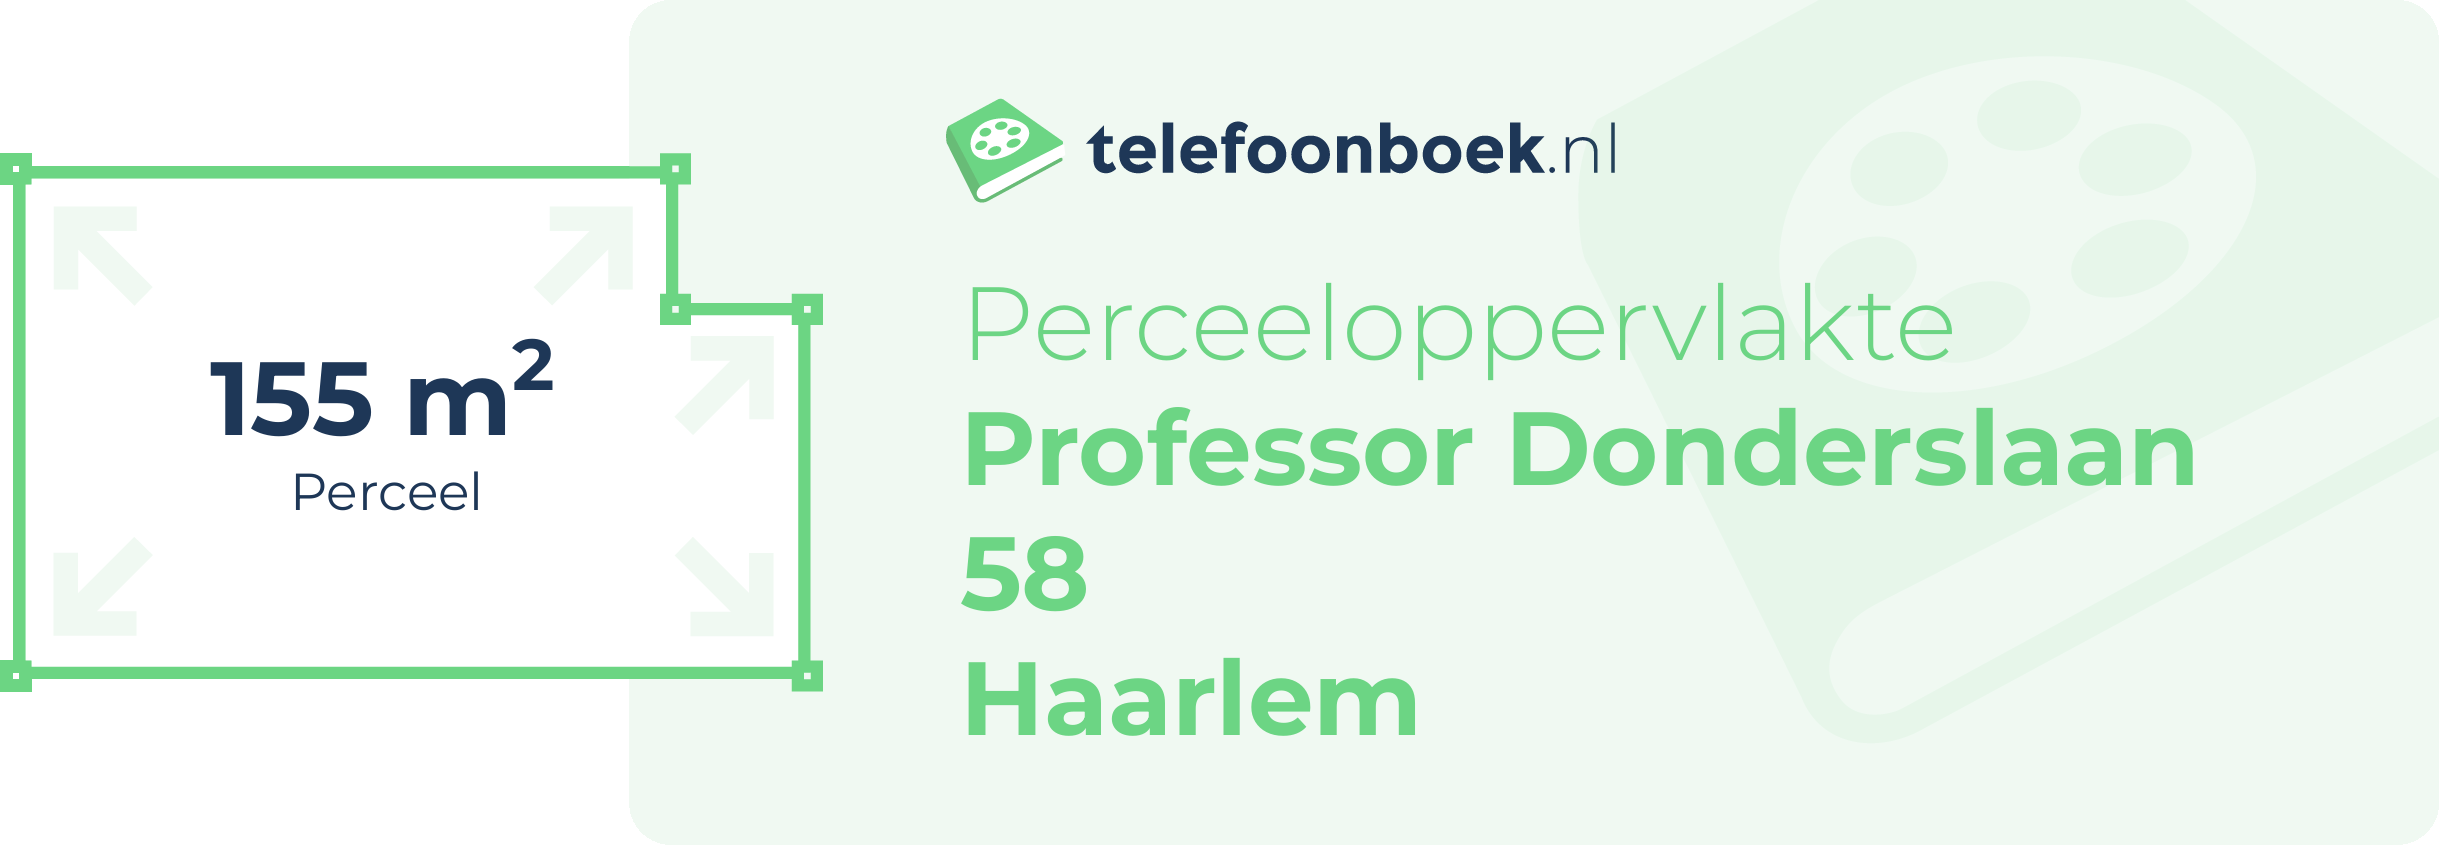 Perceeloppervlakte Professor Donderslaan 58 Haarlem